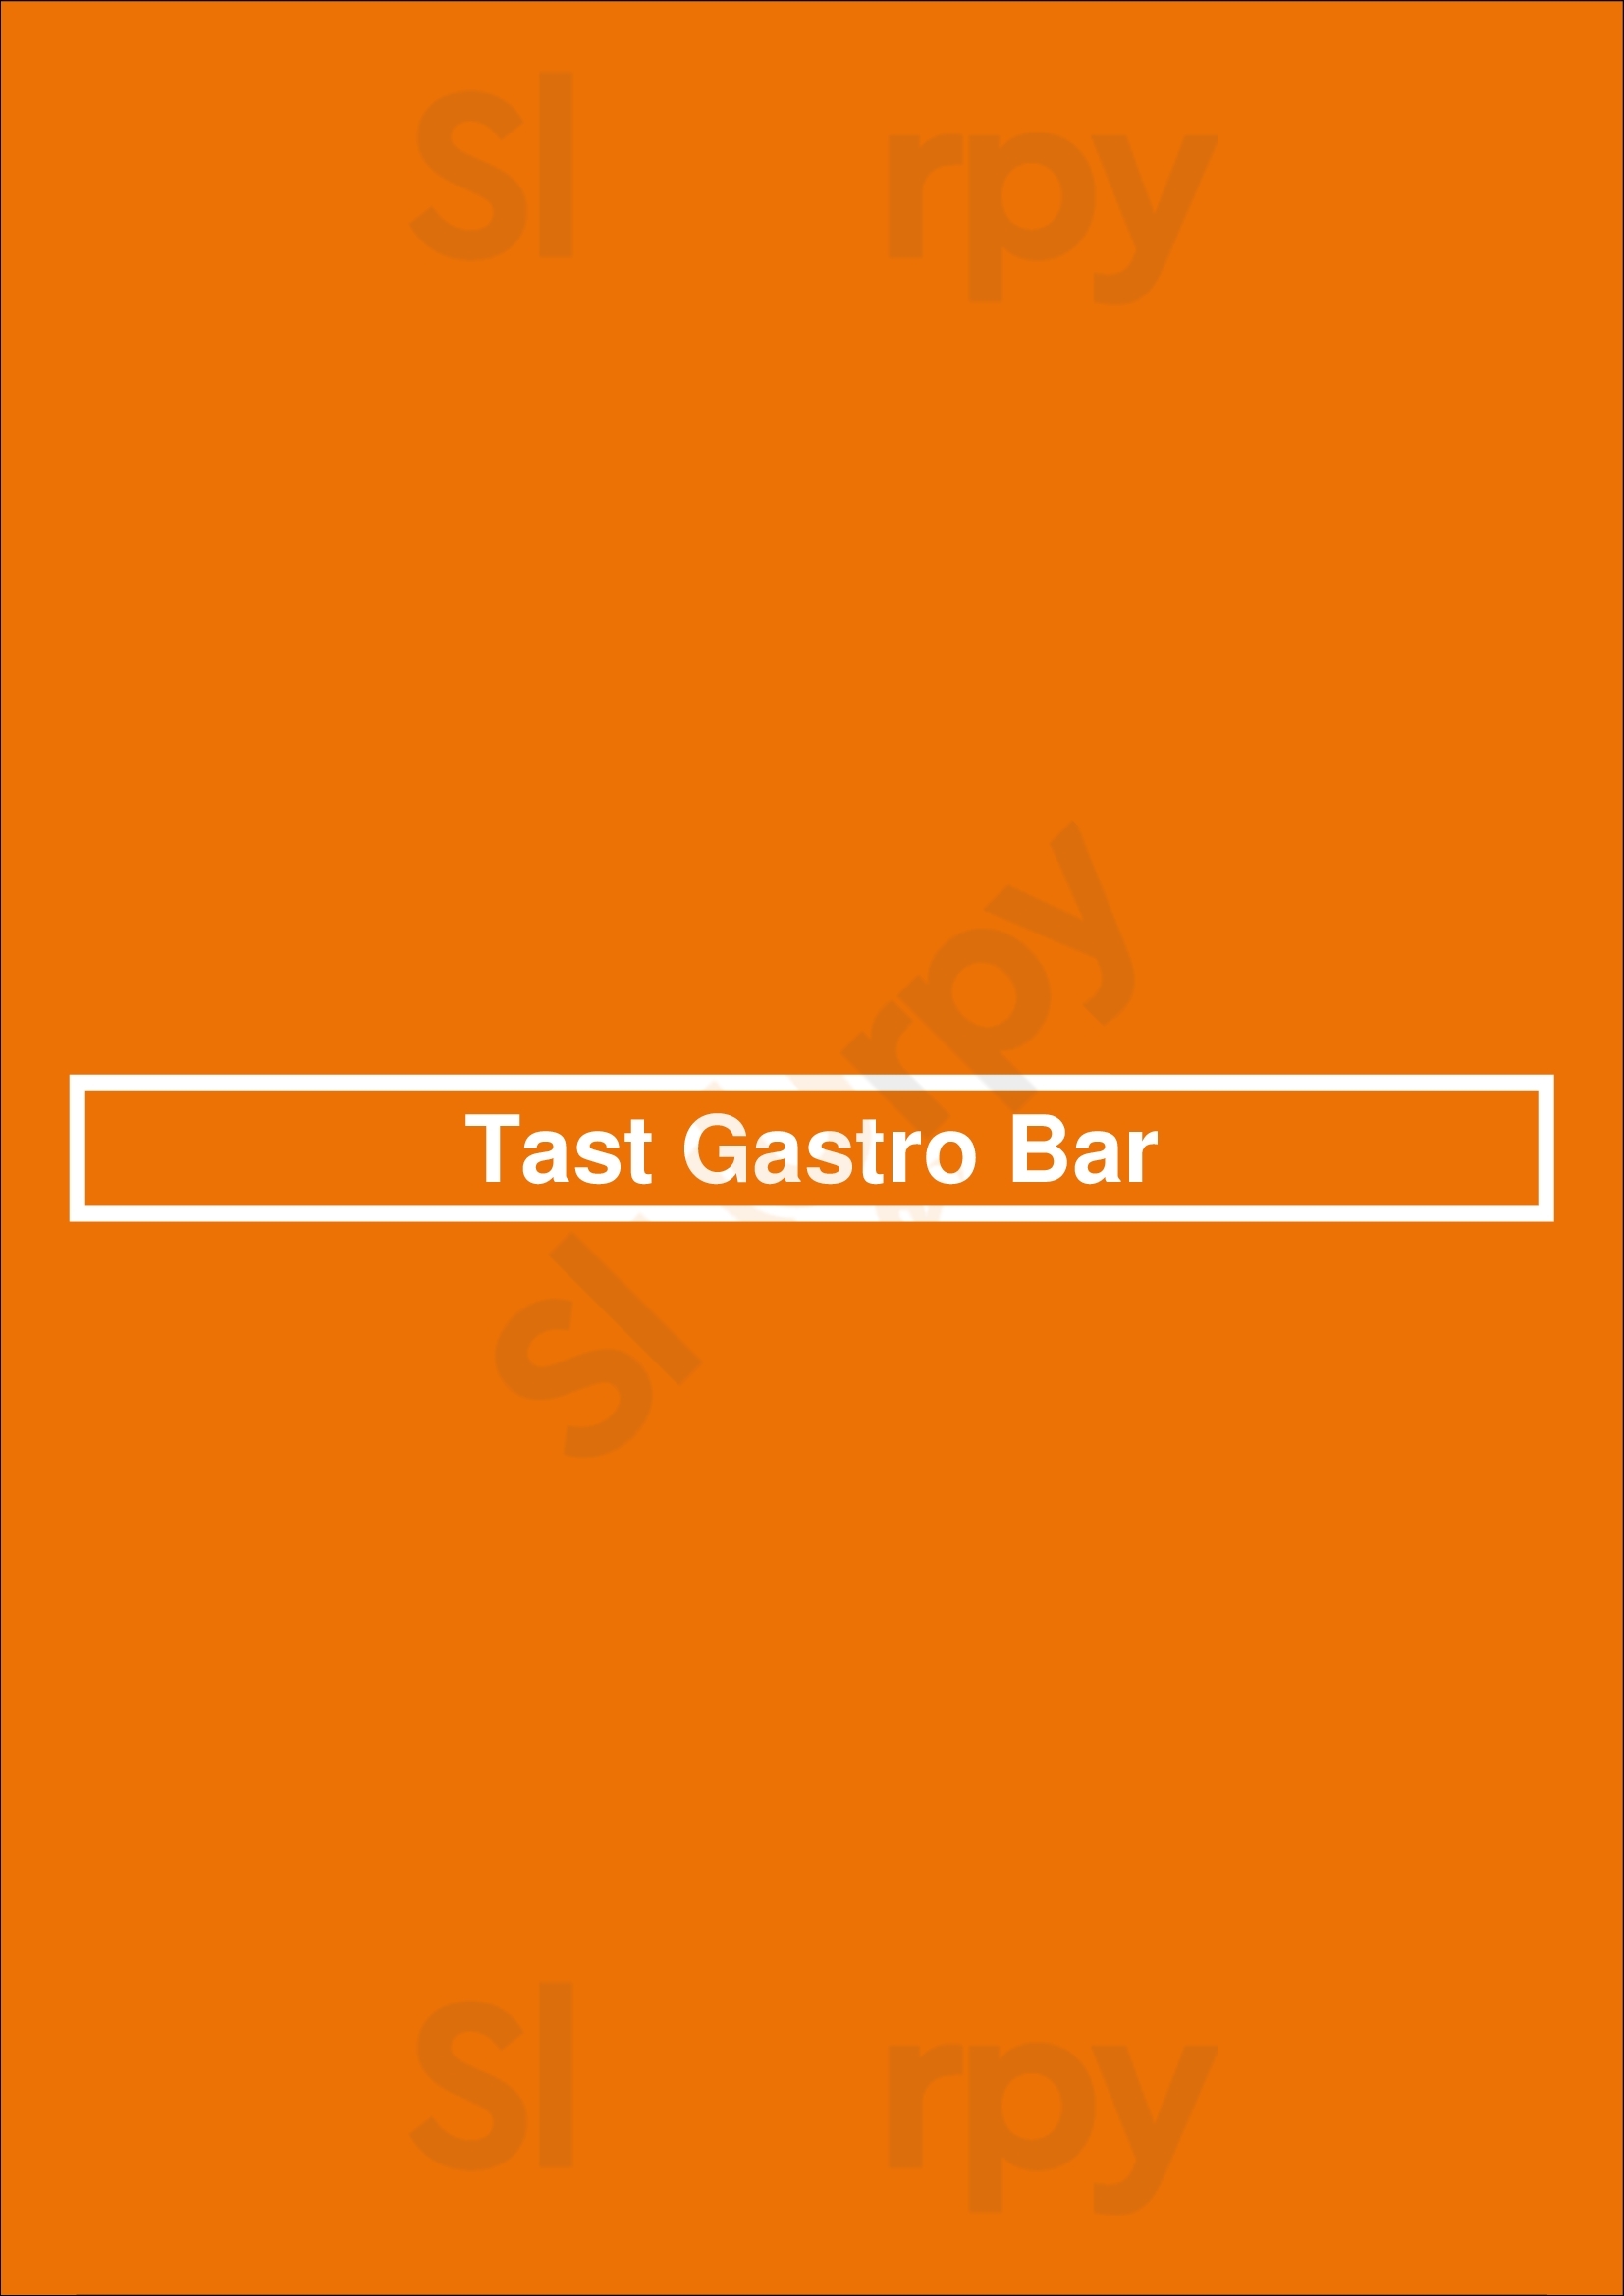 Tast Gastro Bar Barcelona Menu - 1